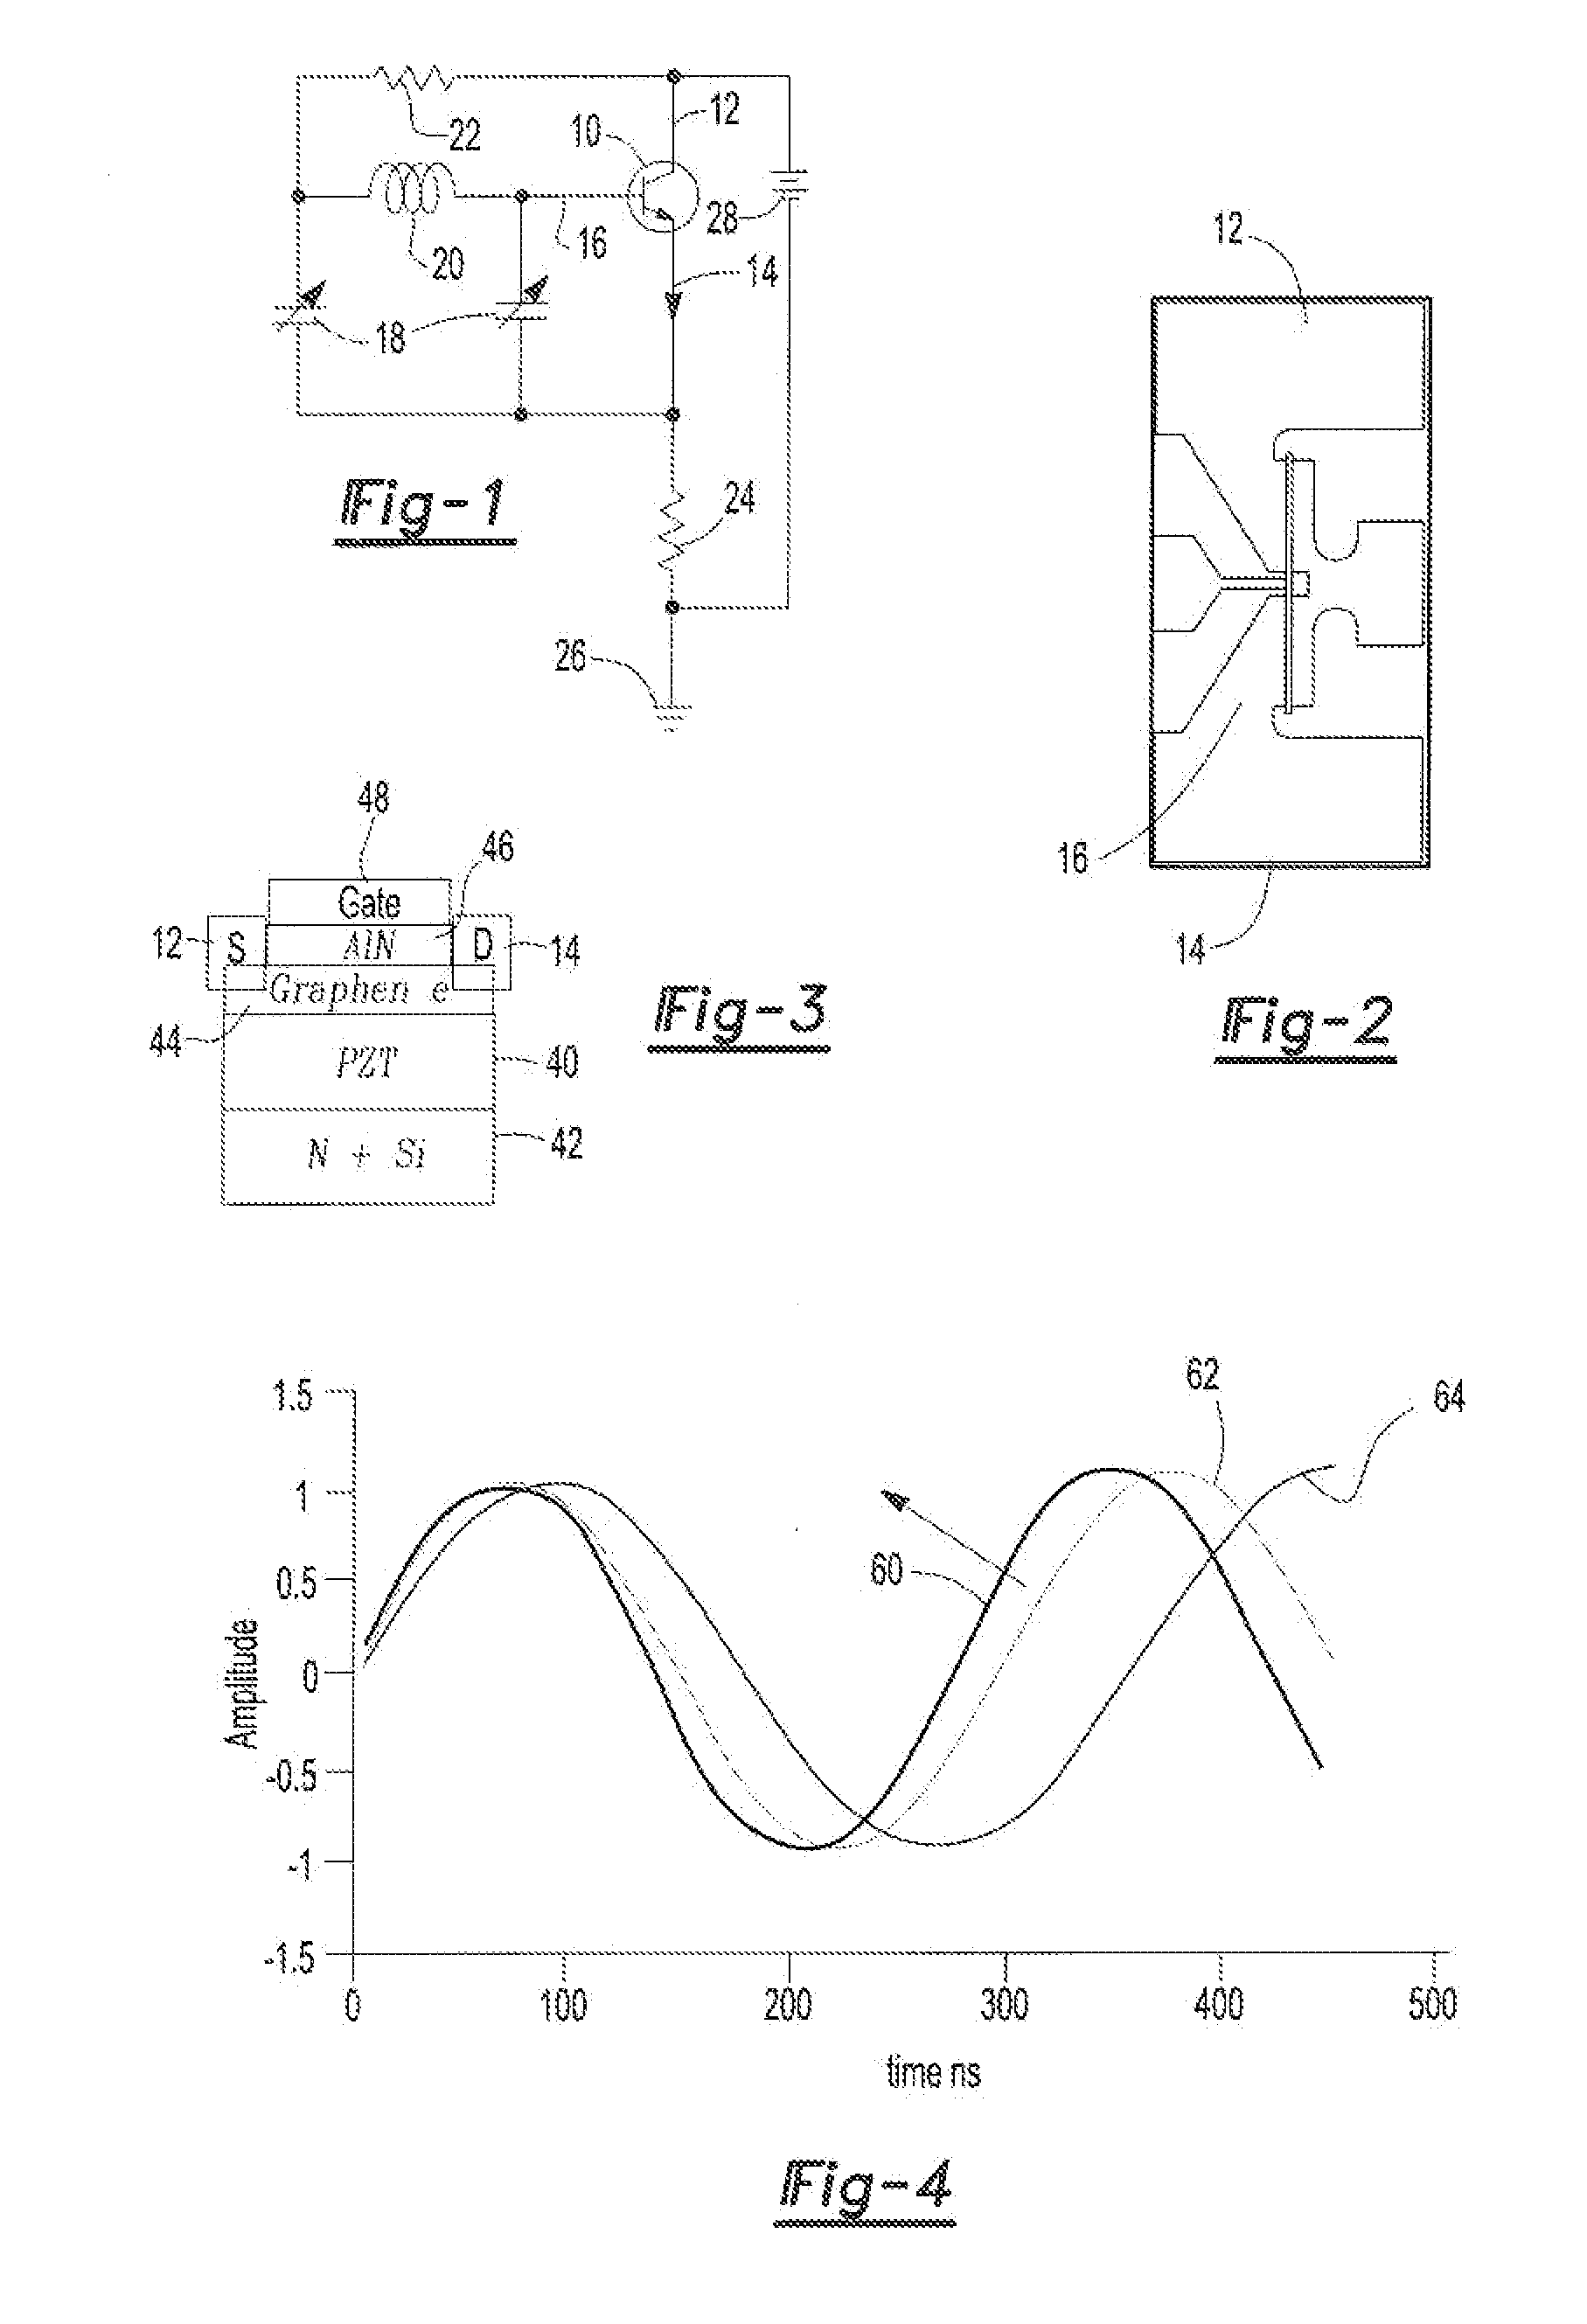 Voltage tunable oscillator using bilayer graphene and a lead zirconate titanate capacitor